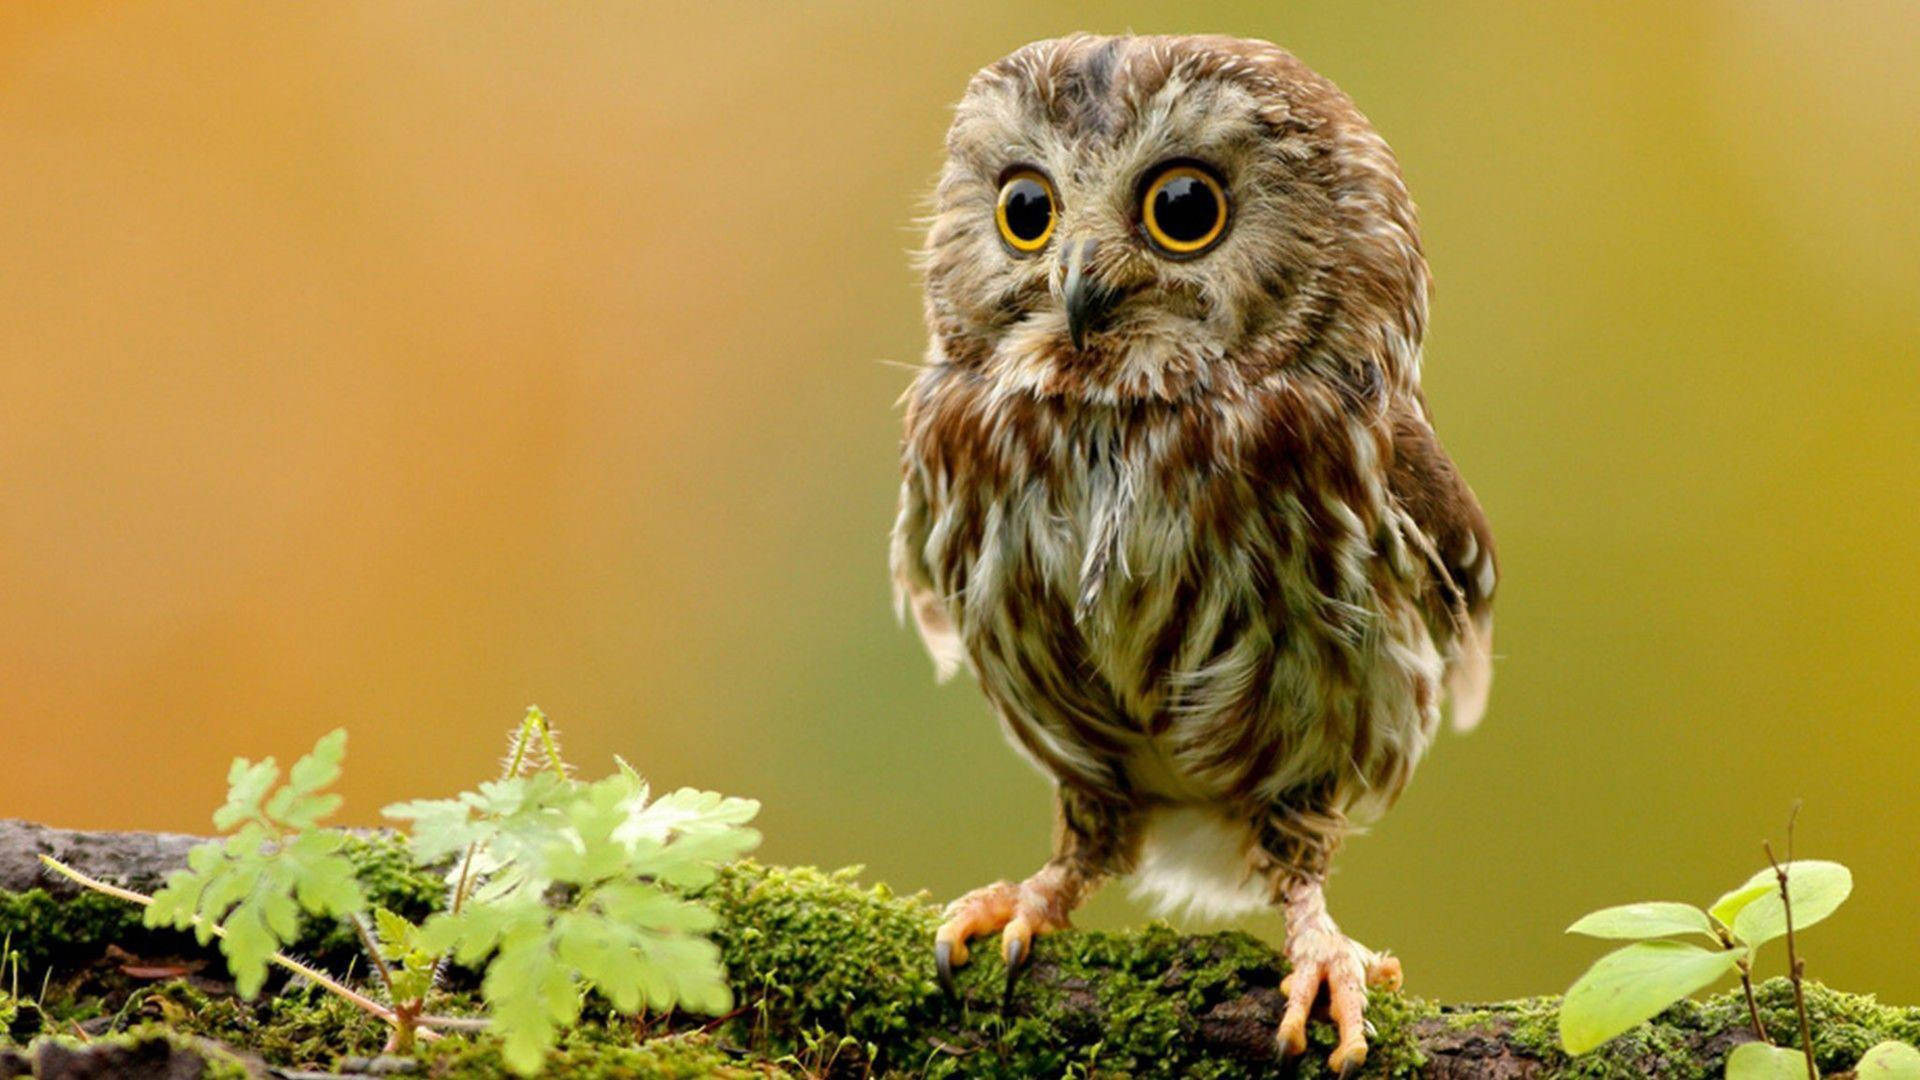 Cute Owl Macro Shot Background